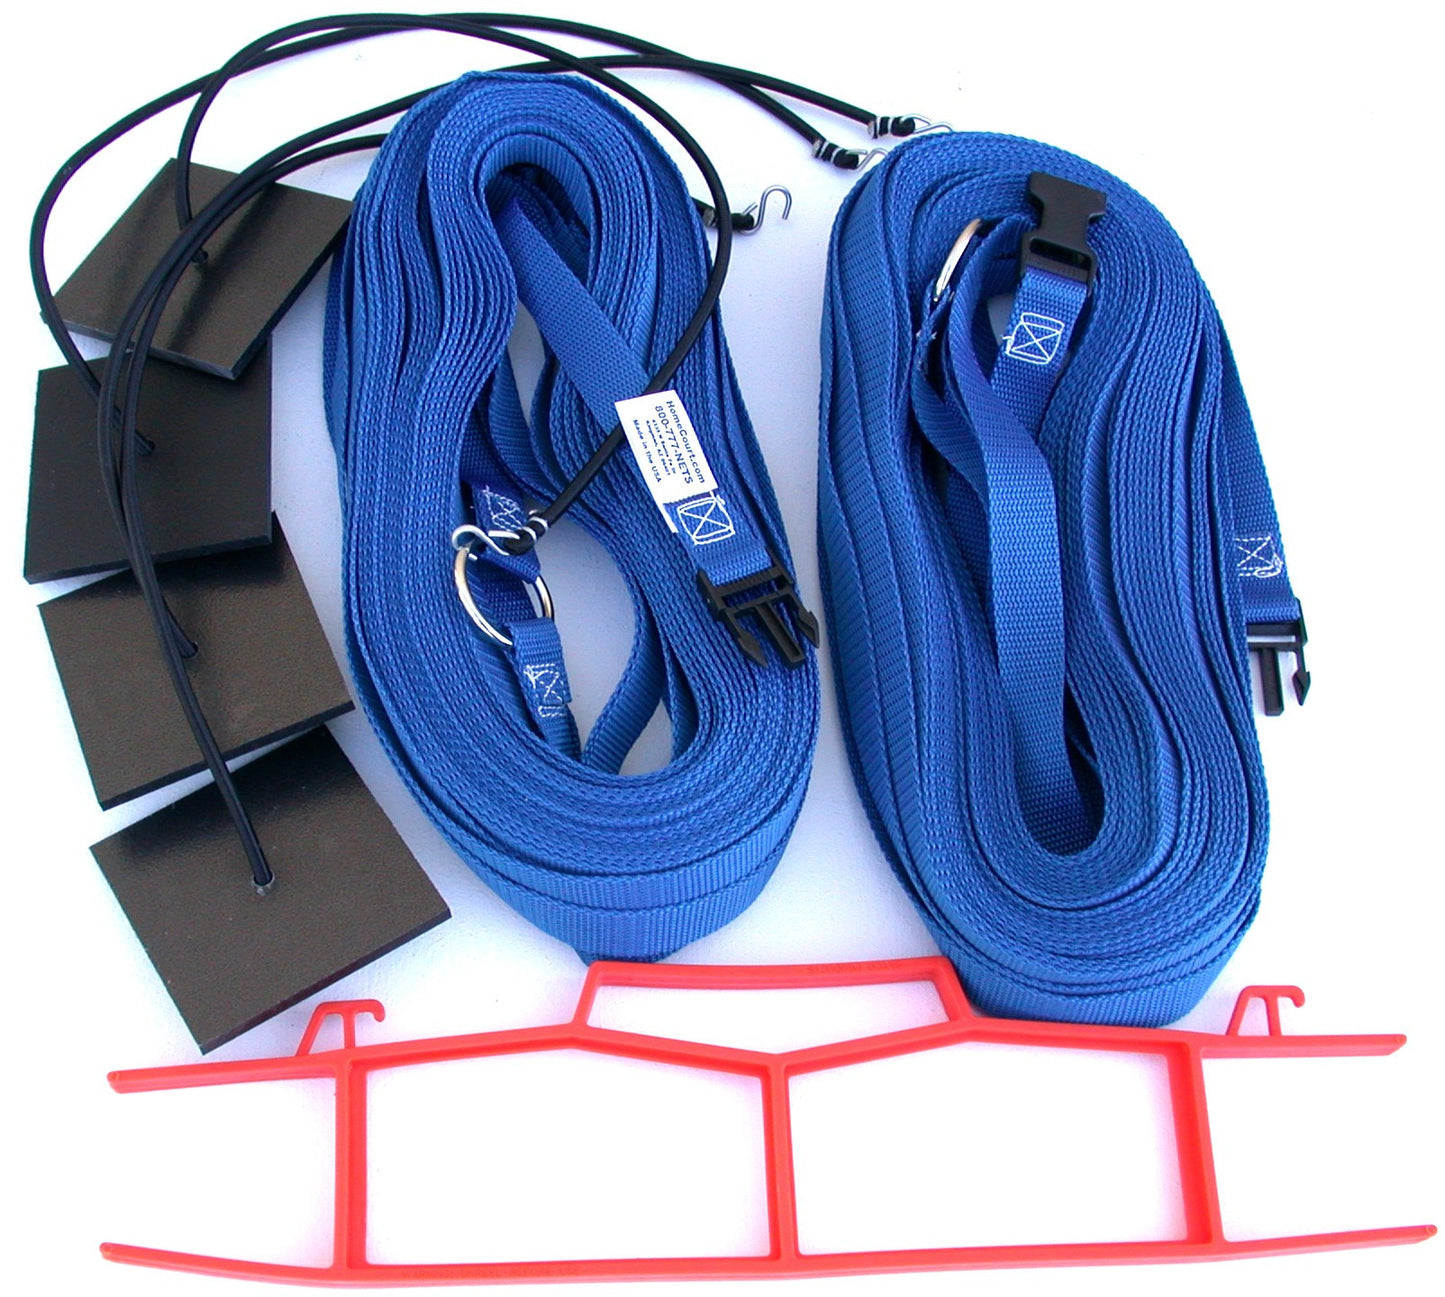 17NABUB-blue 1-inch non-adjustable web boundary, sand plates, storage winder